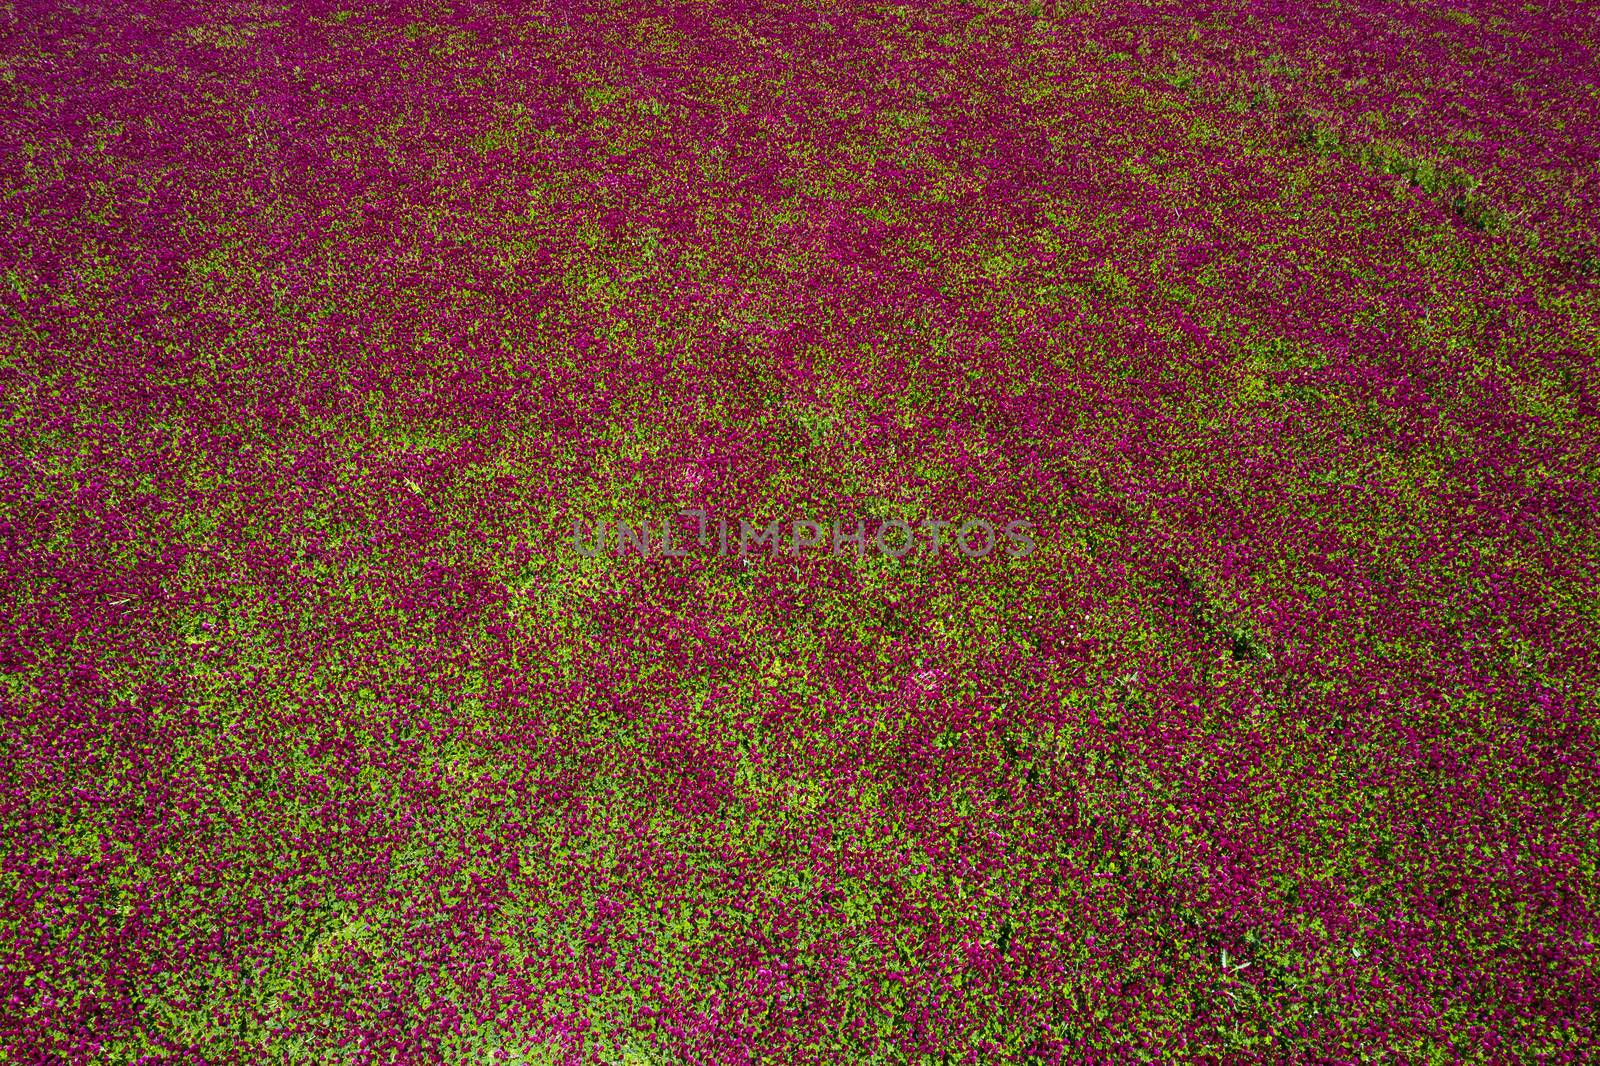 Red blooming crimson clover field (Trifolium incarnatum) from above